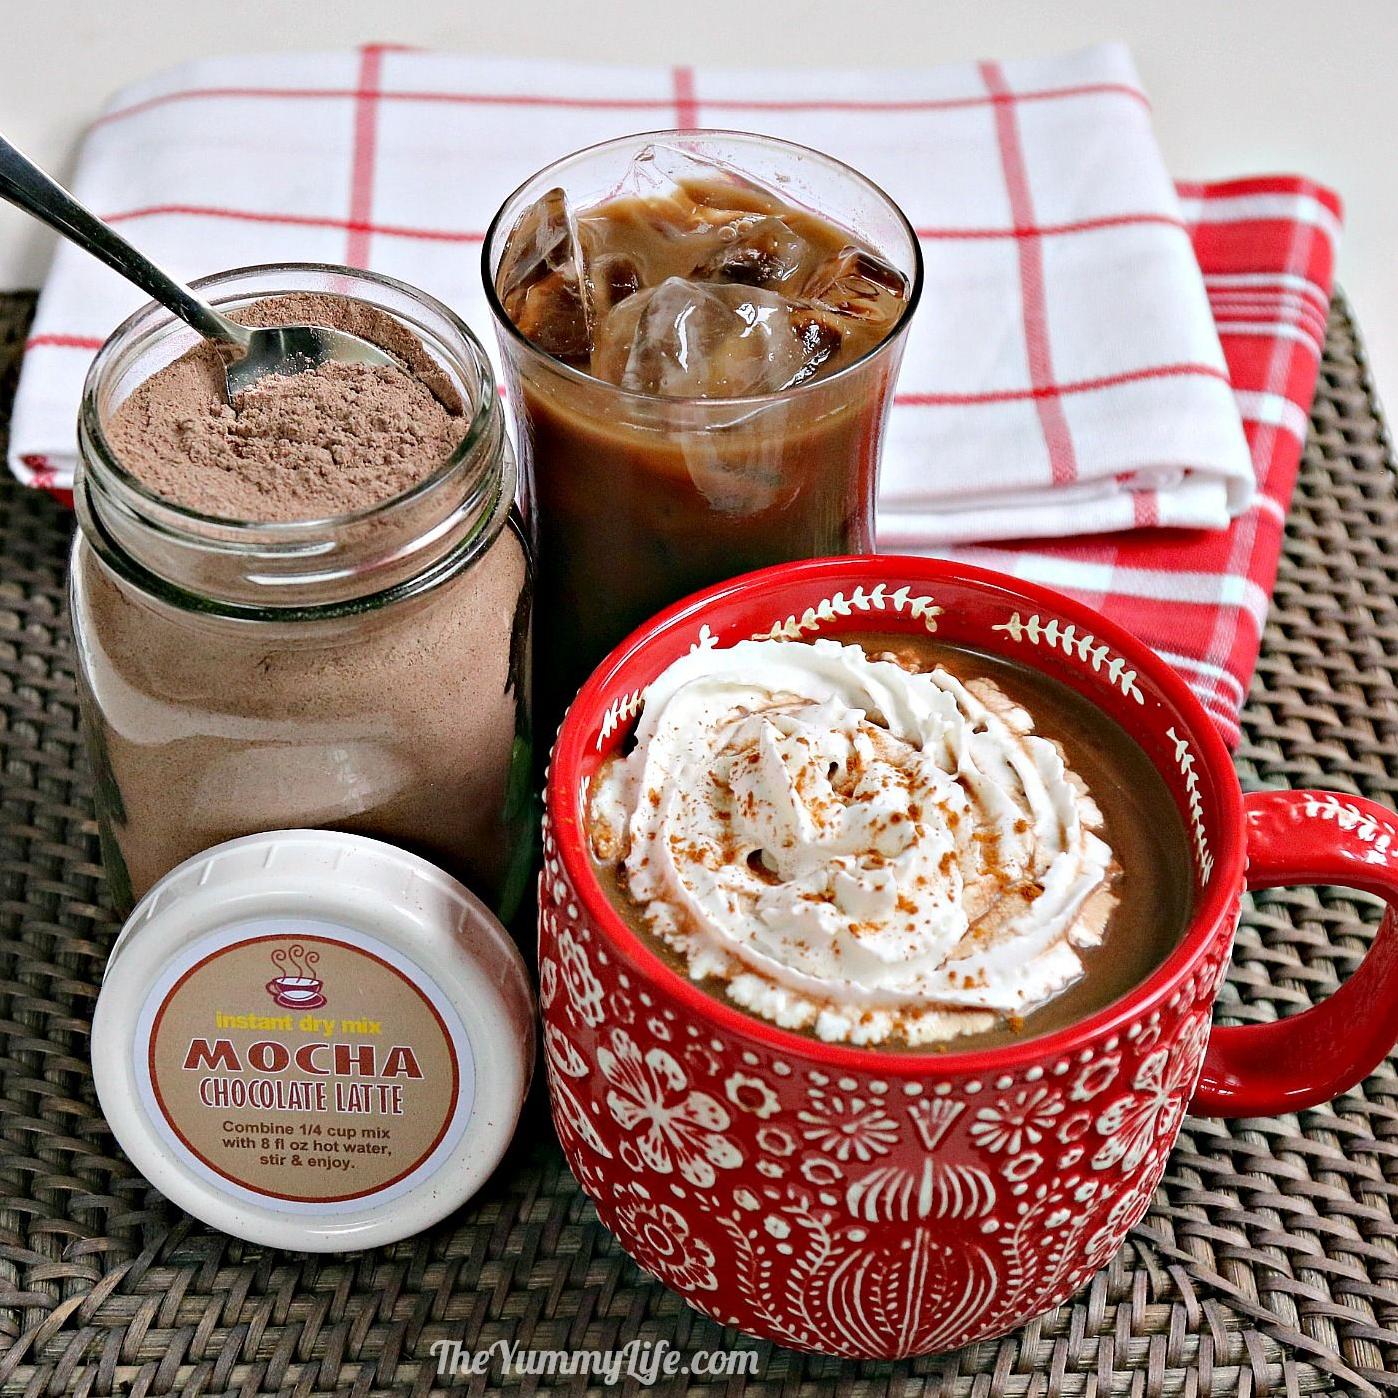  Give your taste buds a chocolatey caffeine boost.